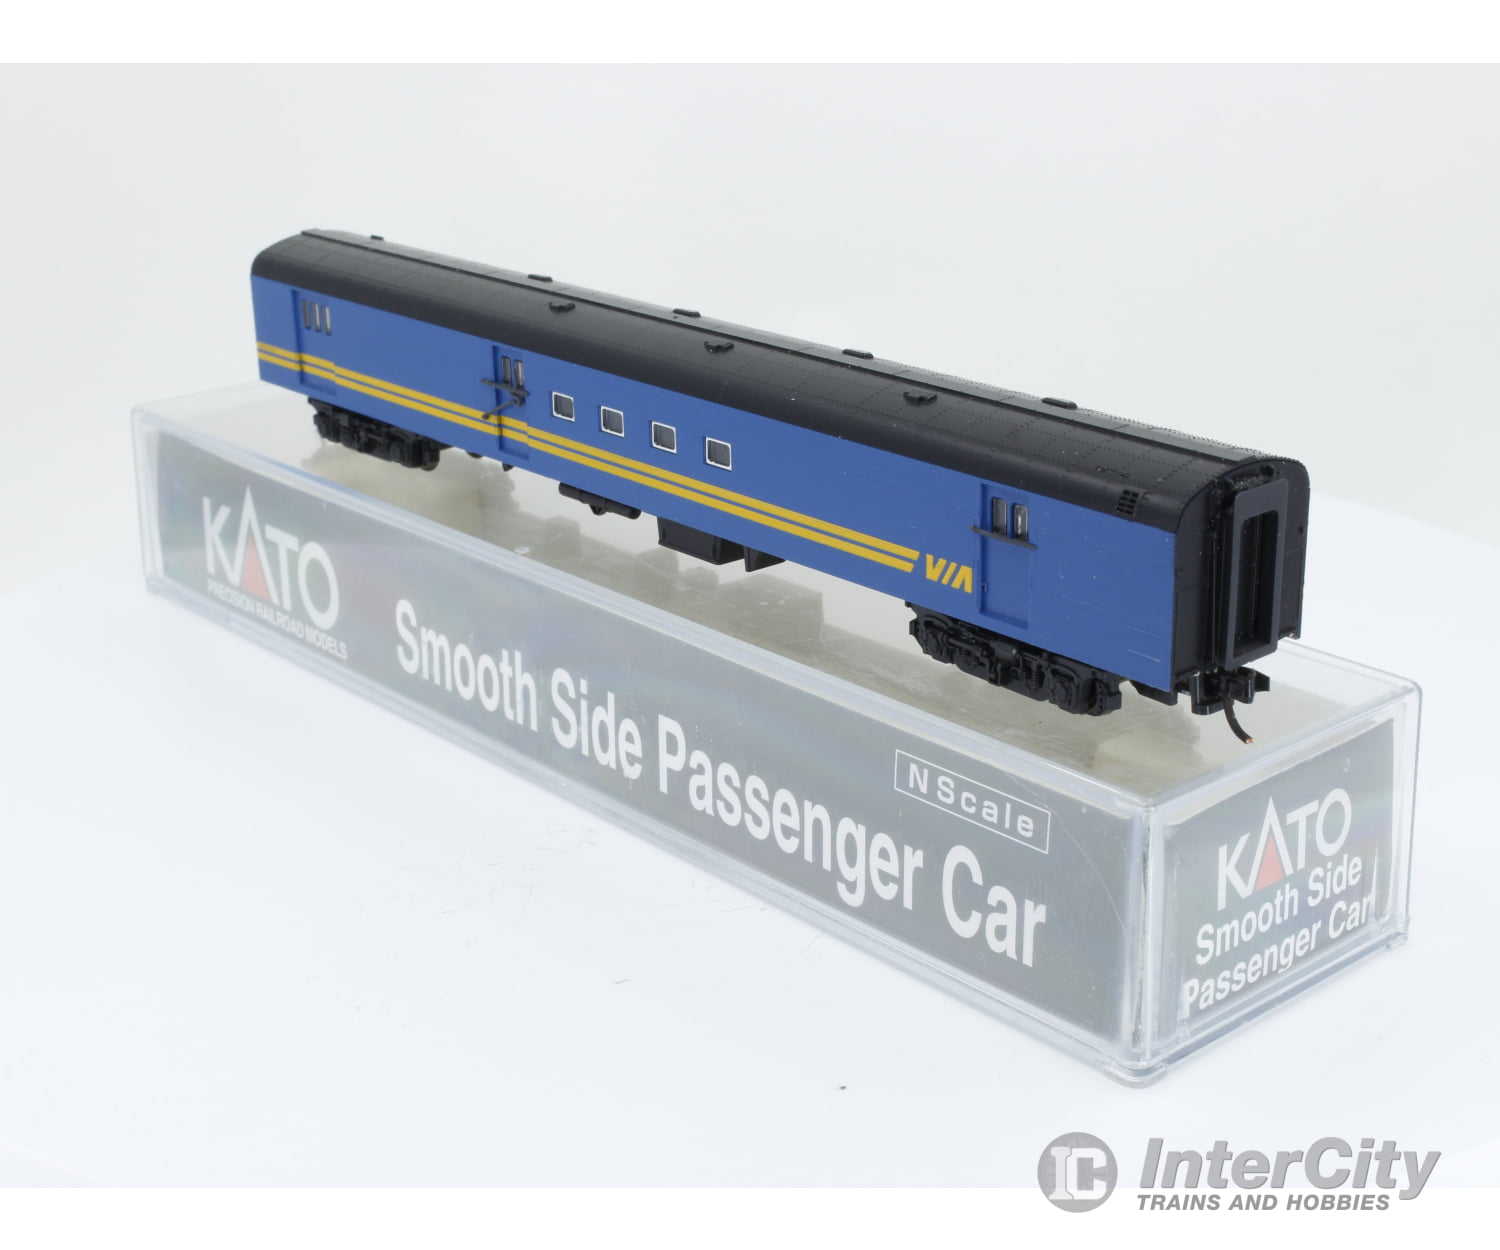 Kato Smooth Side Passenger Car Via Rail (Via) Cars